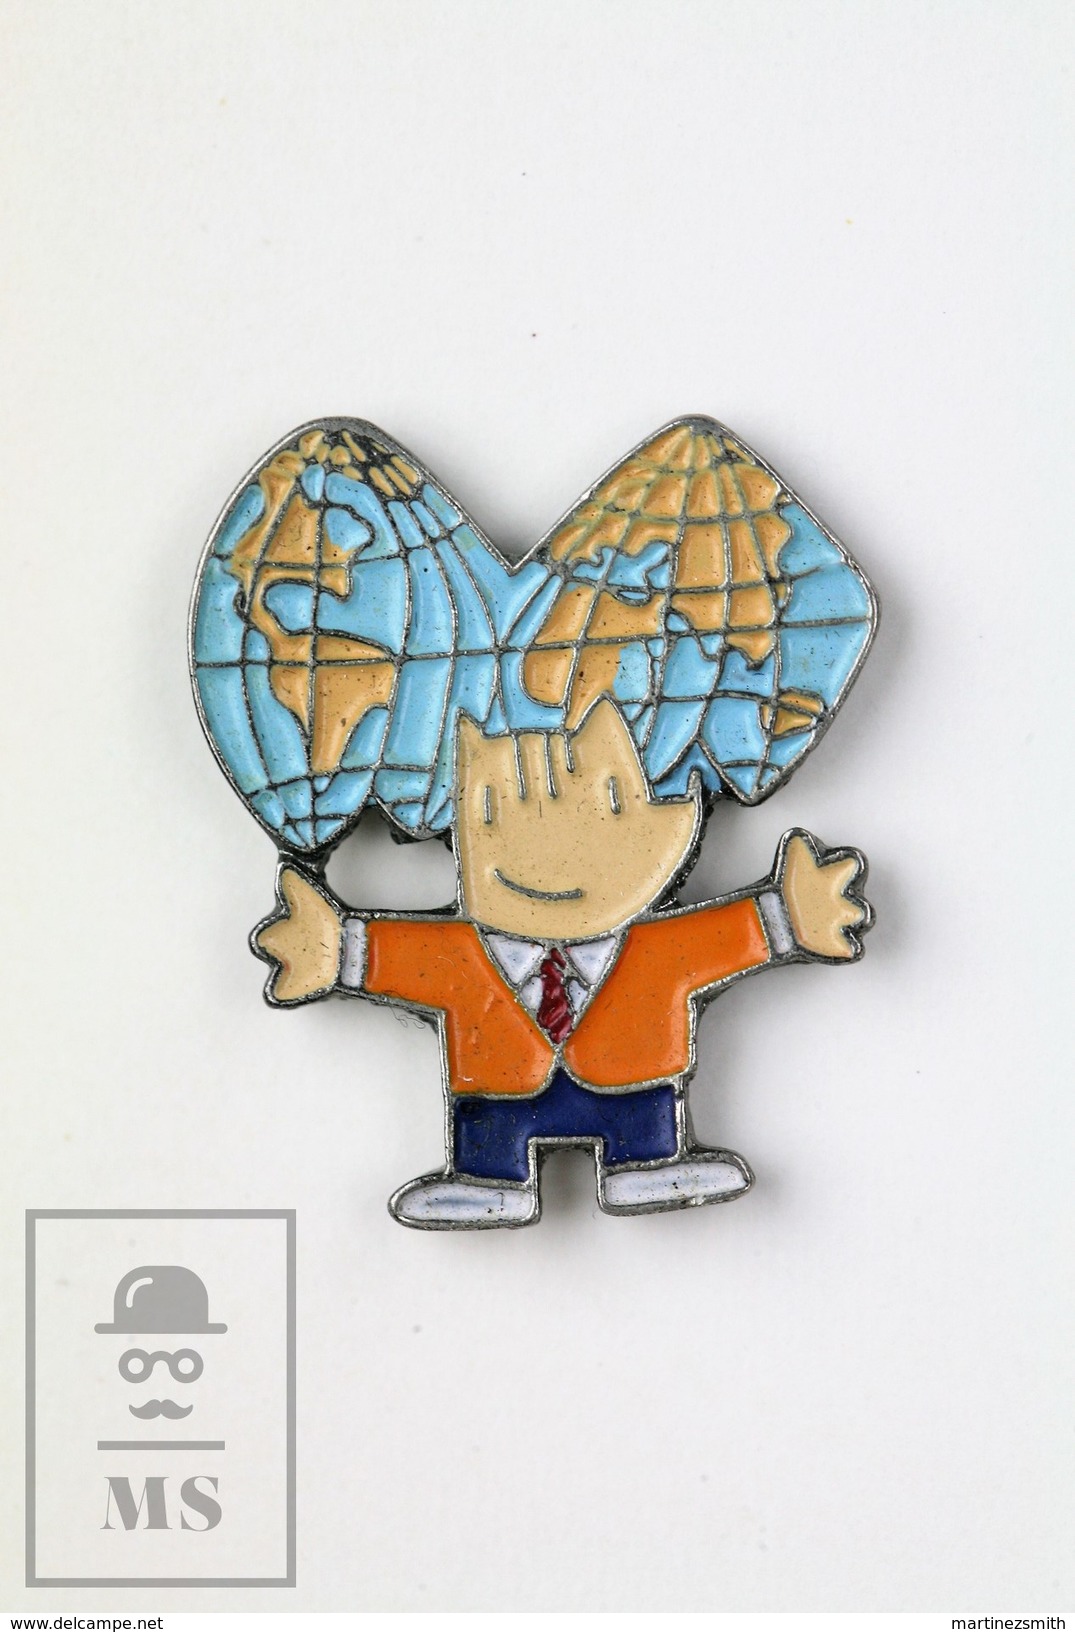 Barcelona 1992 Olympic Games Cobi Mascot - Earth Globe - Pin Badge - Juegos Olímpicos